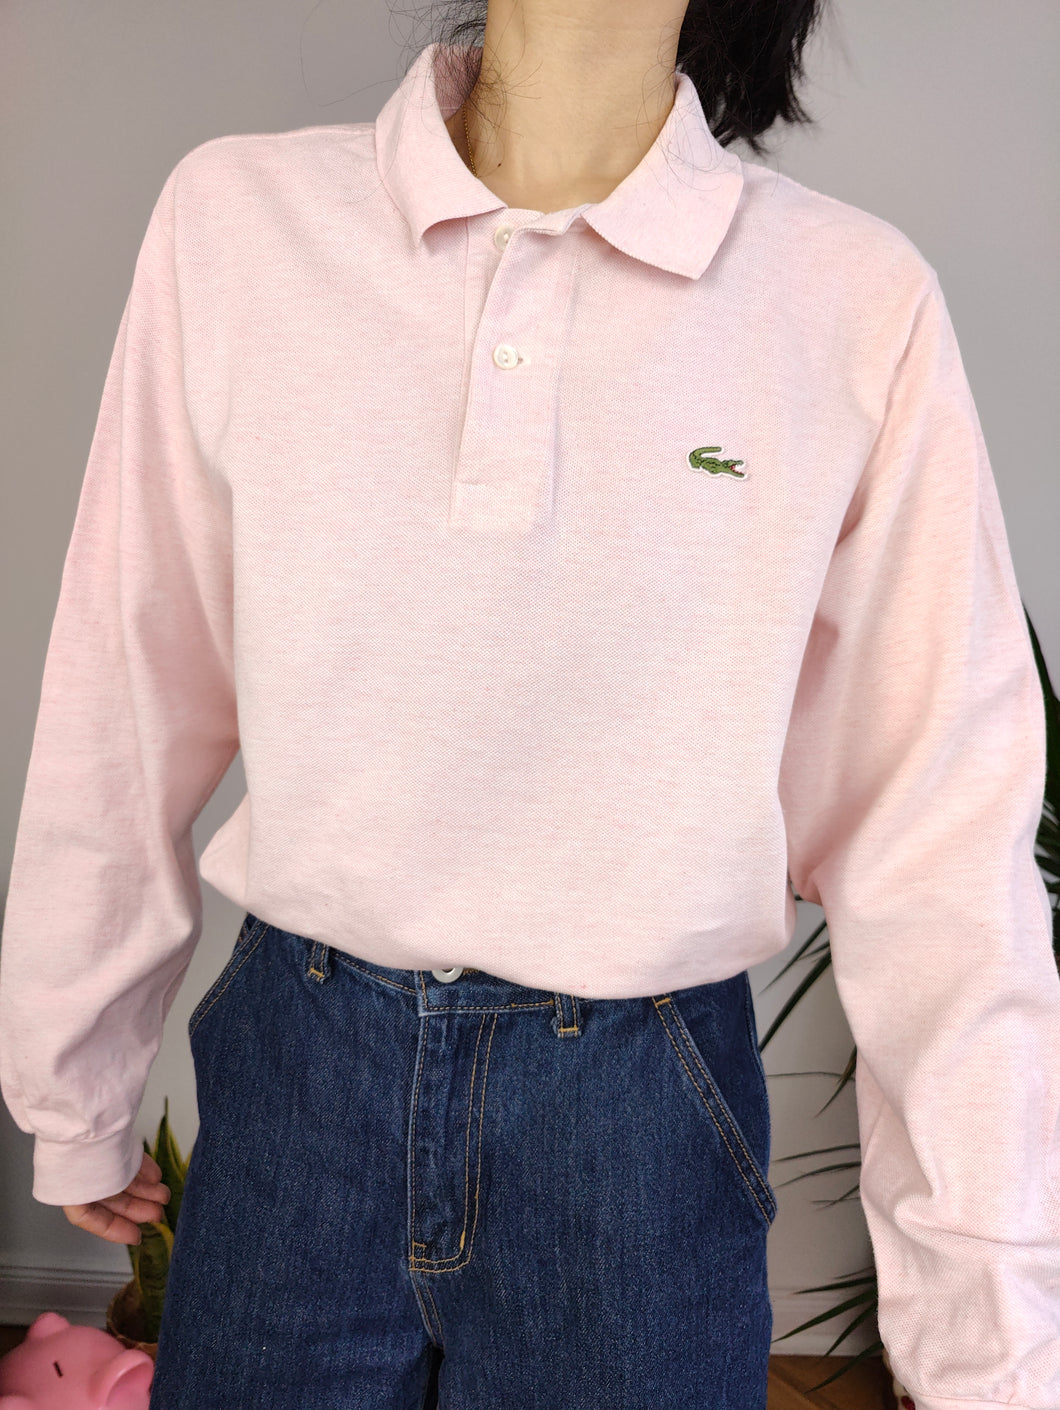 Vintage Lacoste pink long sleeve polo shirt cotton sweater sweatshirt women unisex men 5 M-L